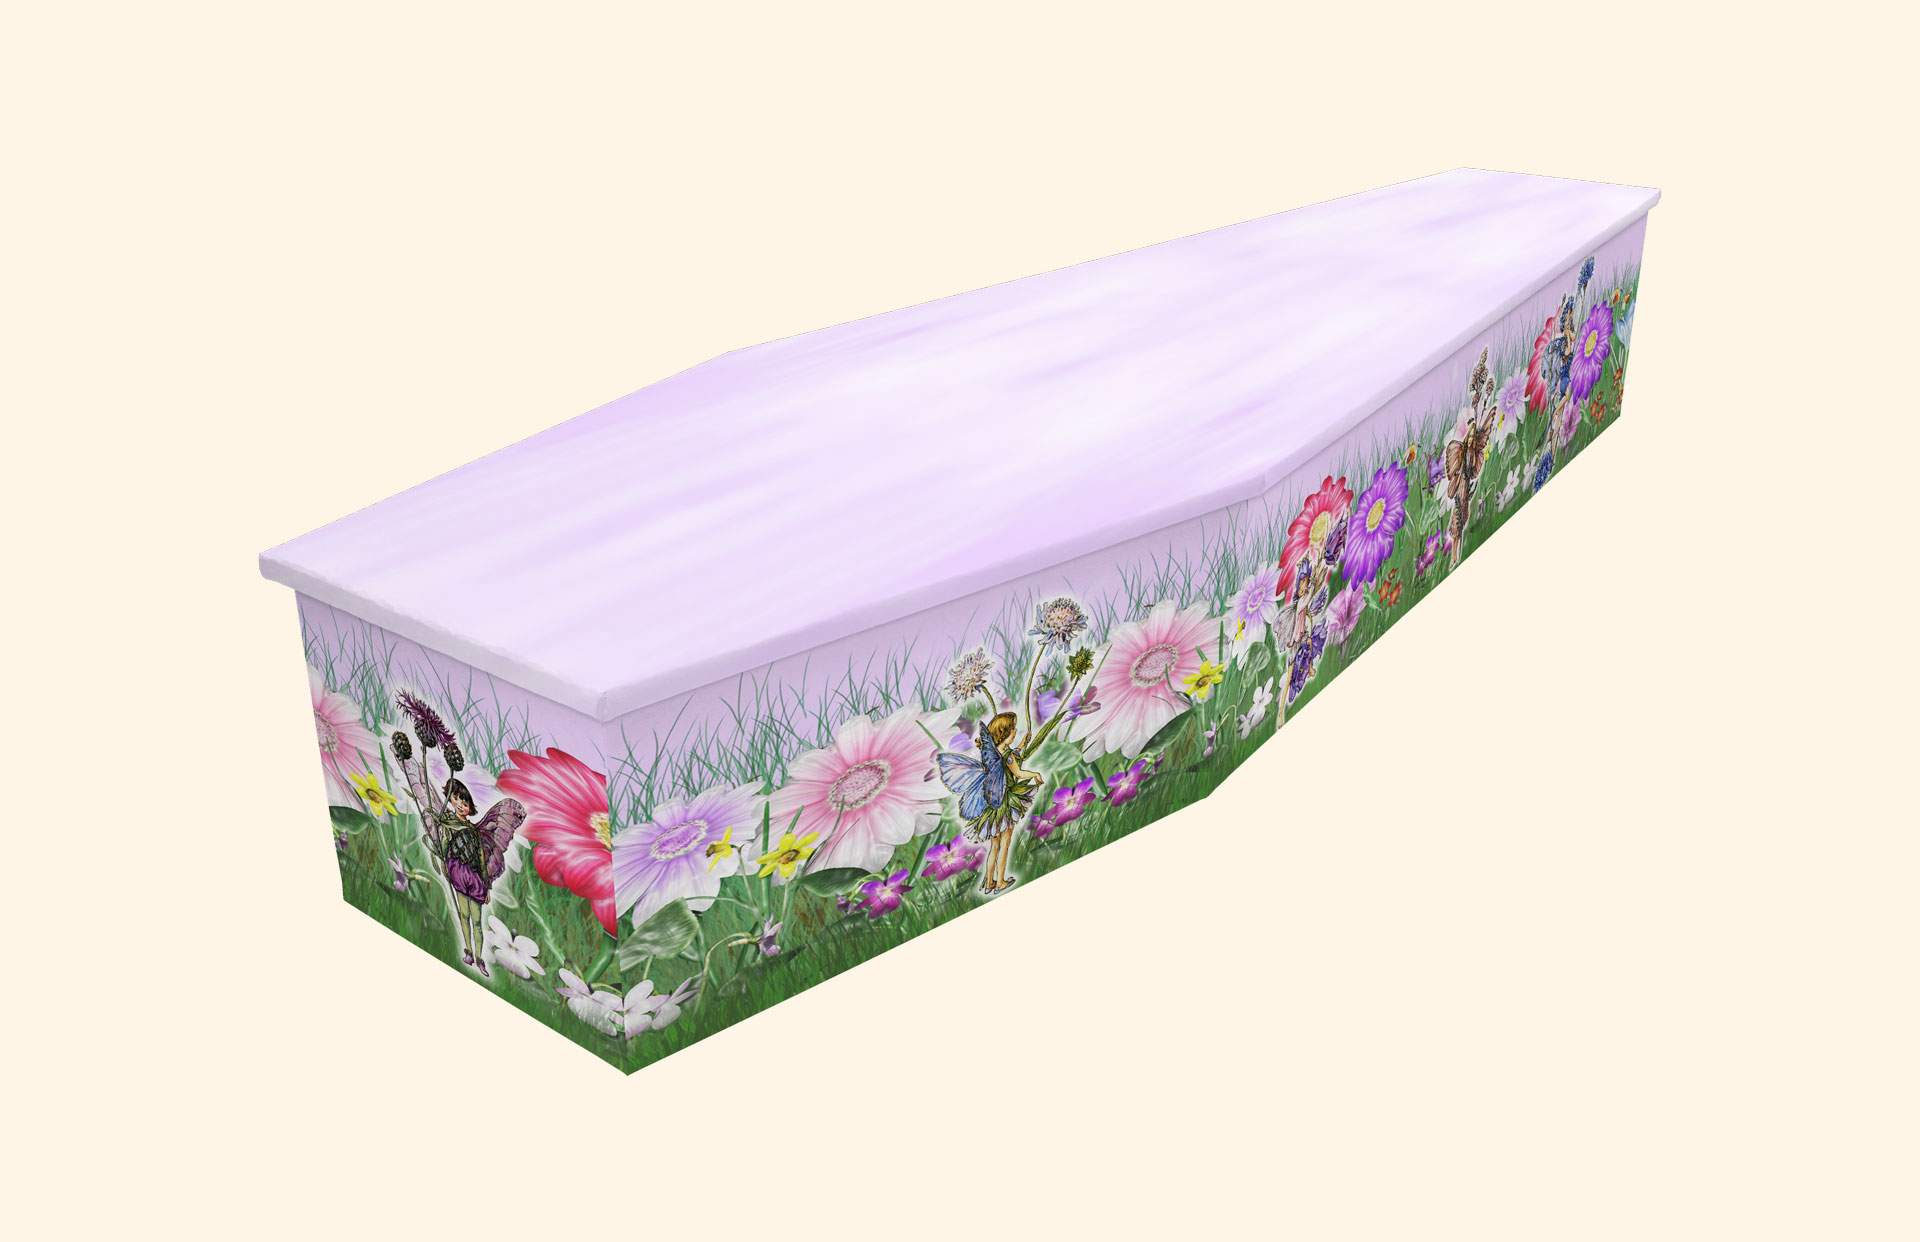 Fairy Garden design on a cardboard coffin